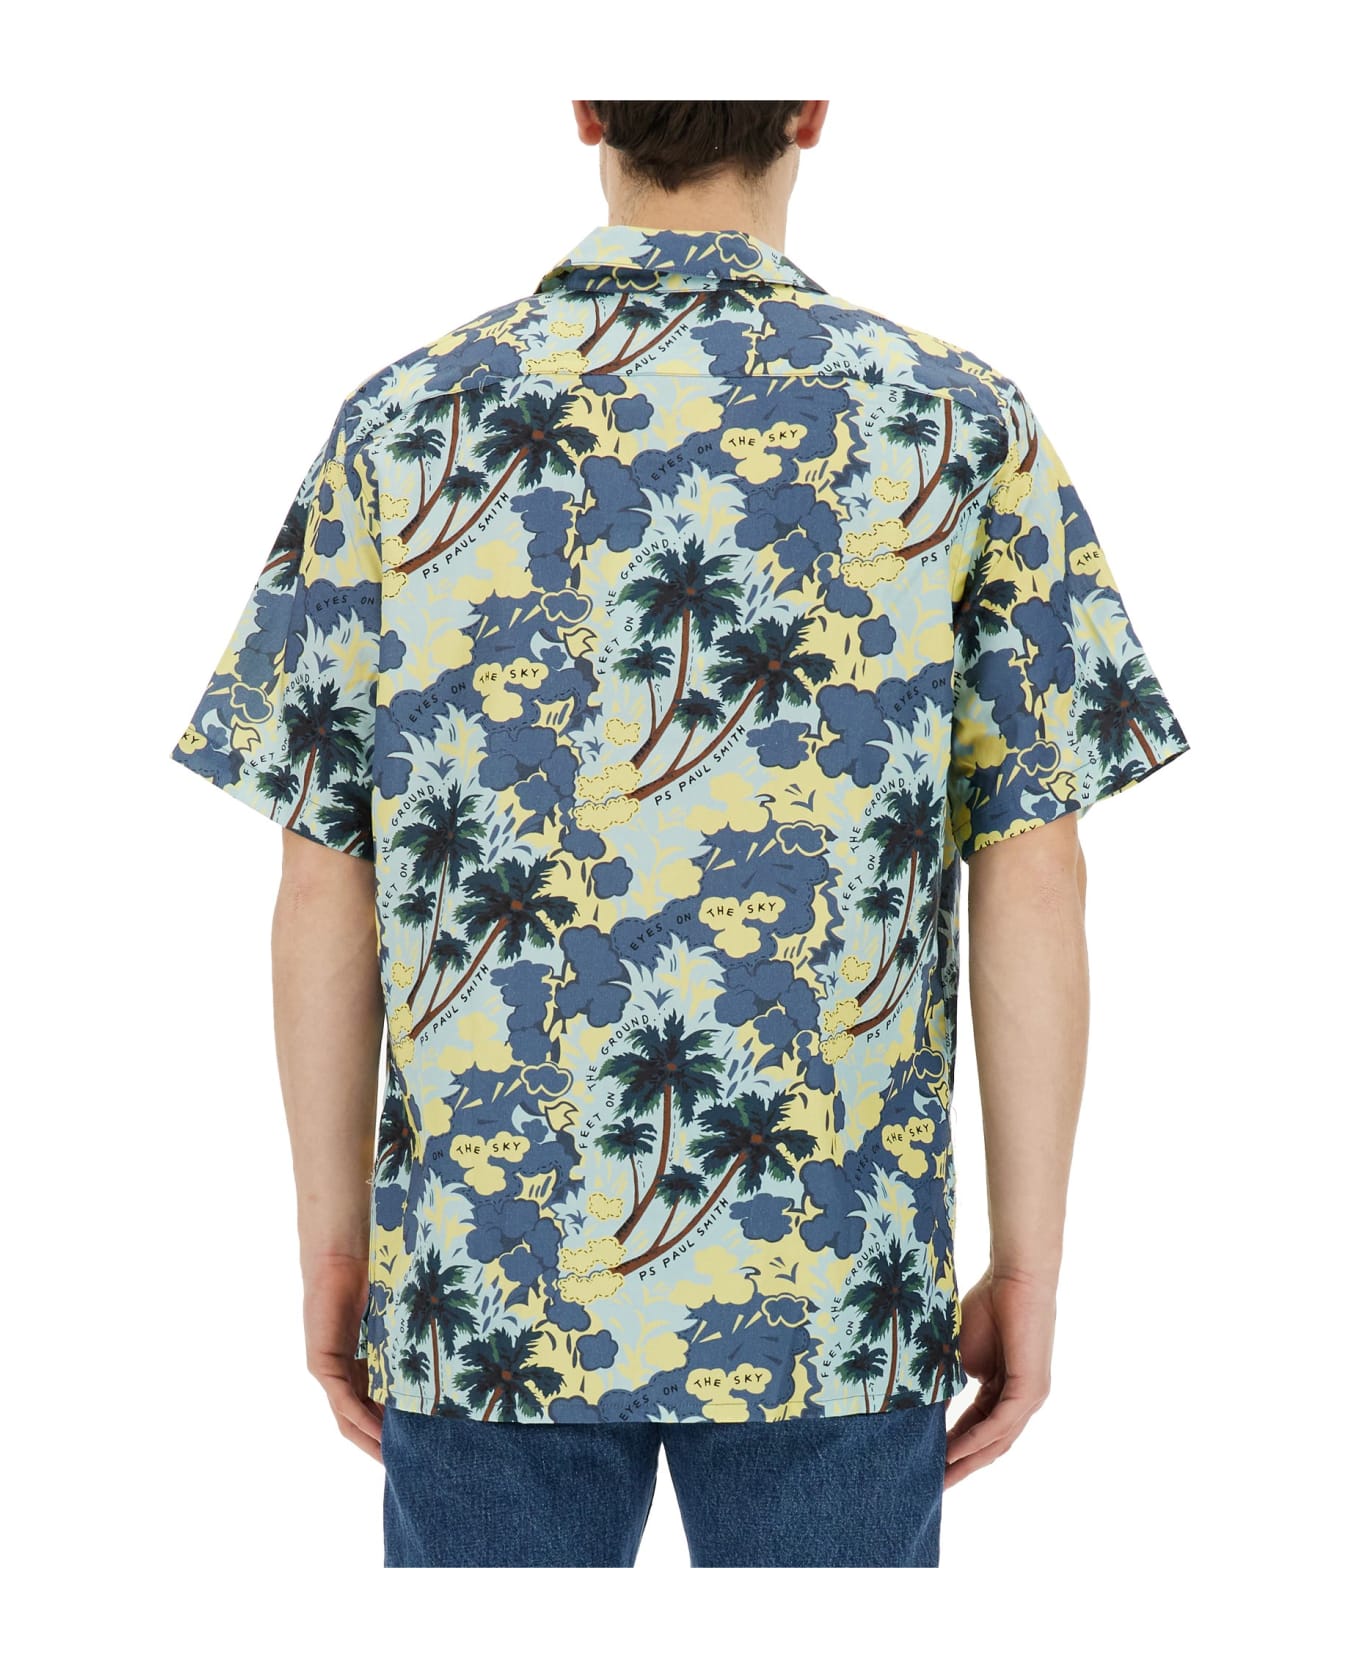 Paul Smith Printed Shirt - MultiColour